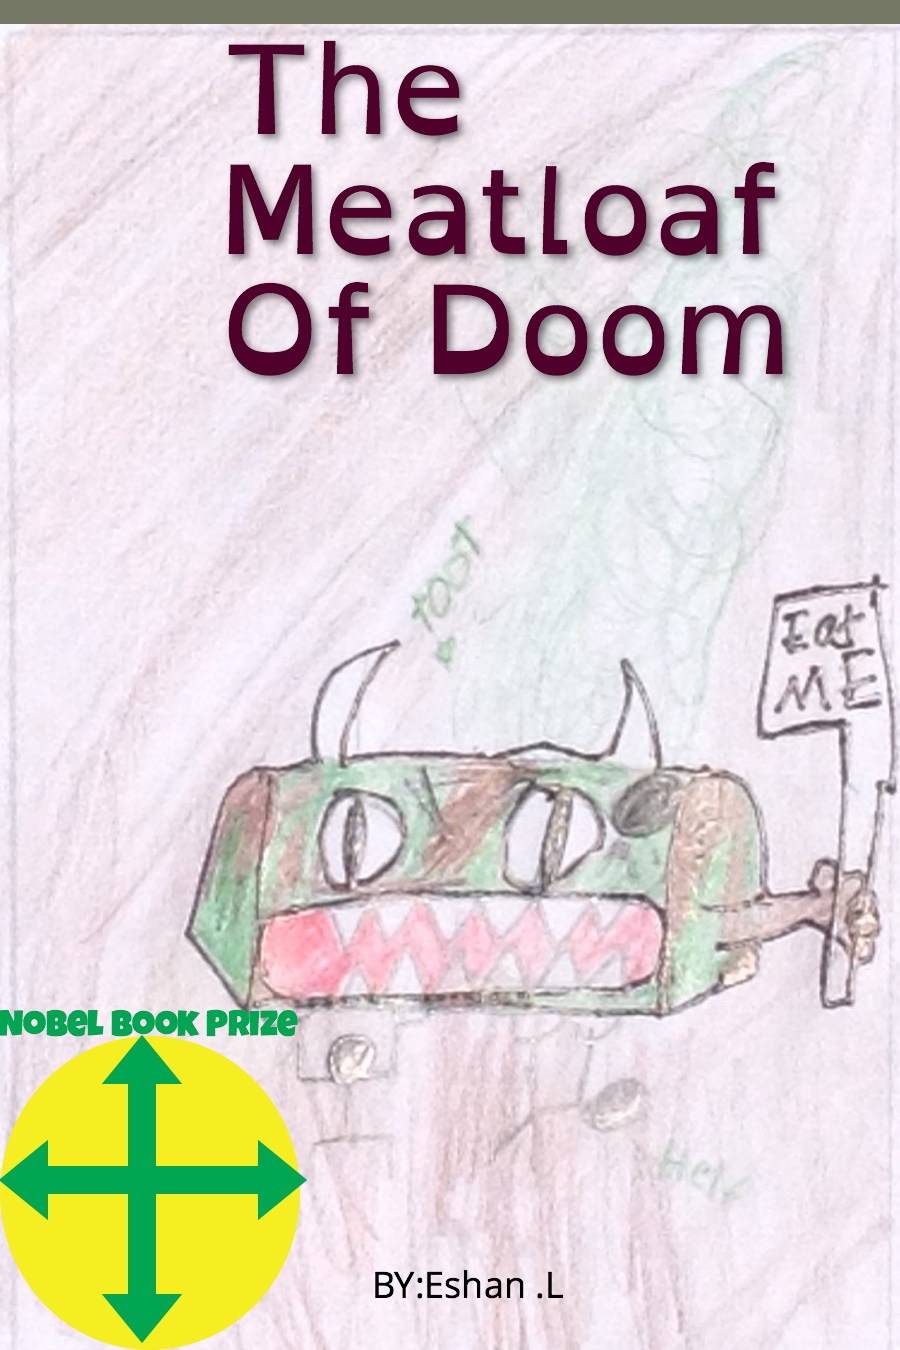 The Meatloaf of Doom by Eshan L